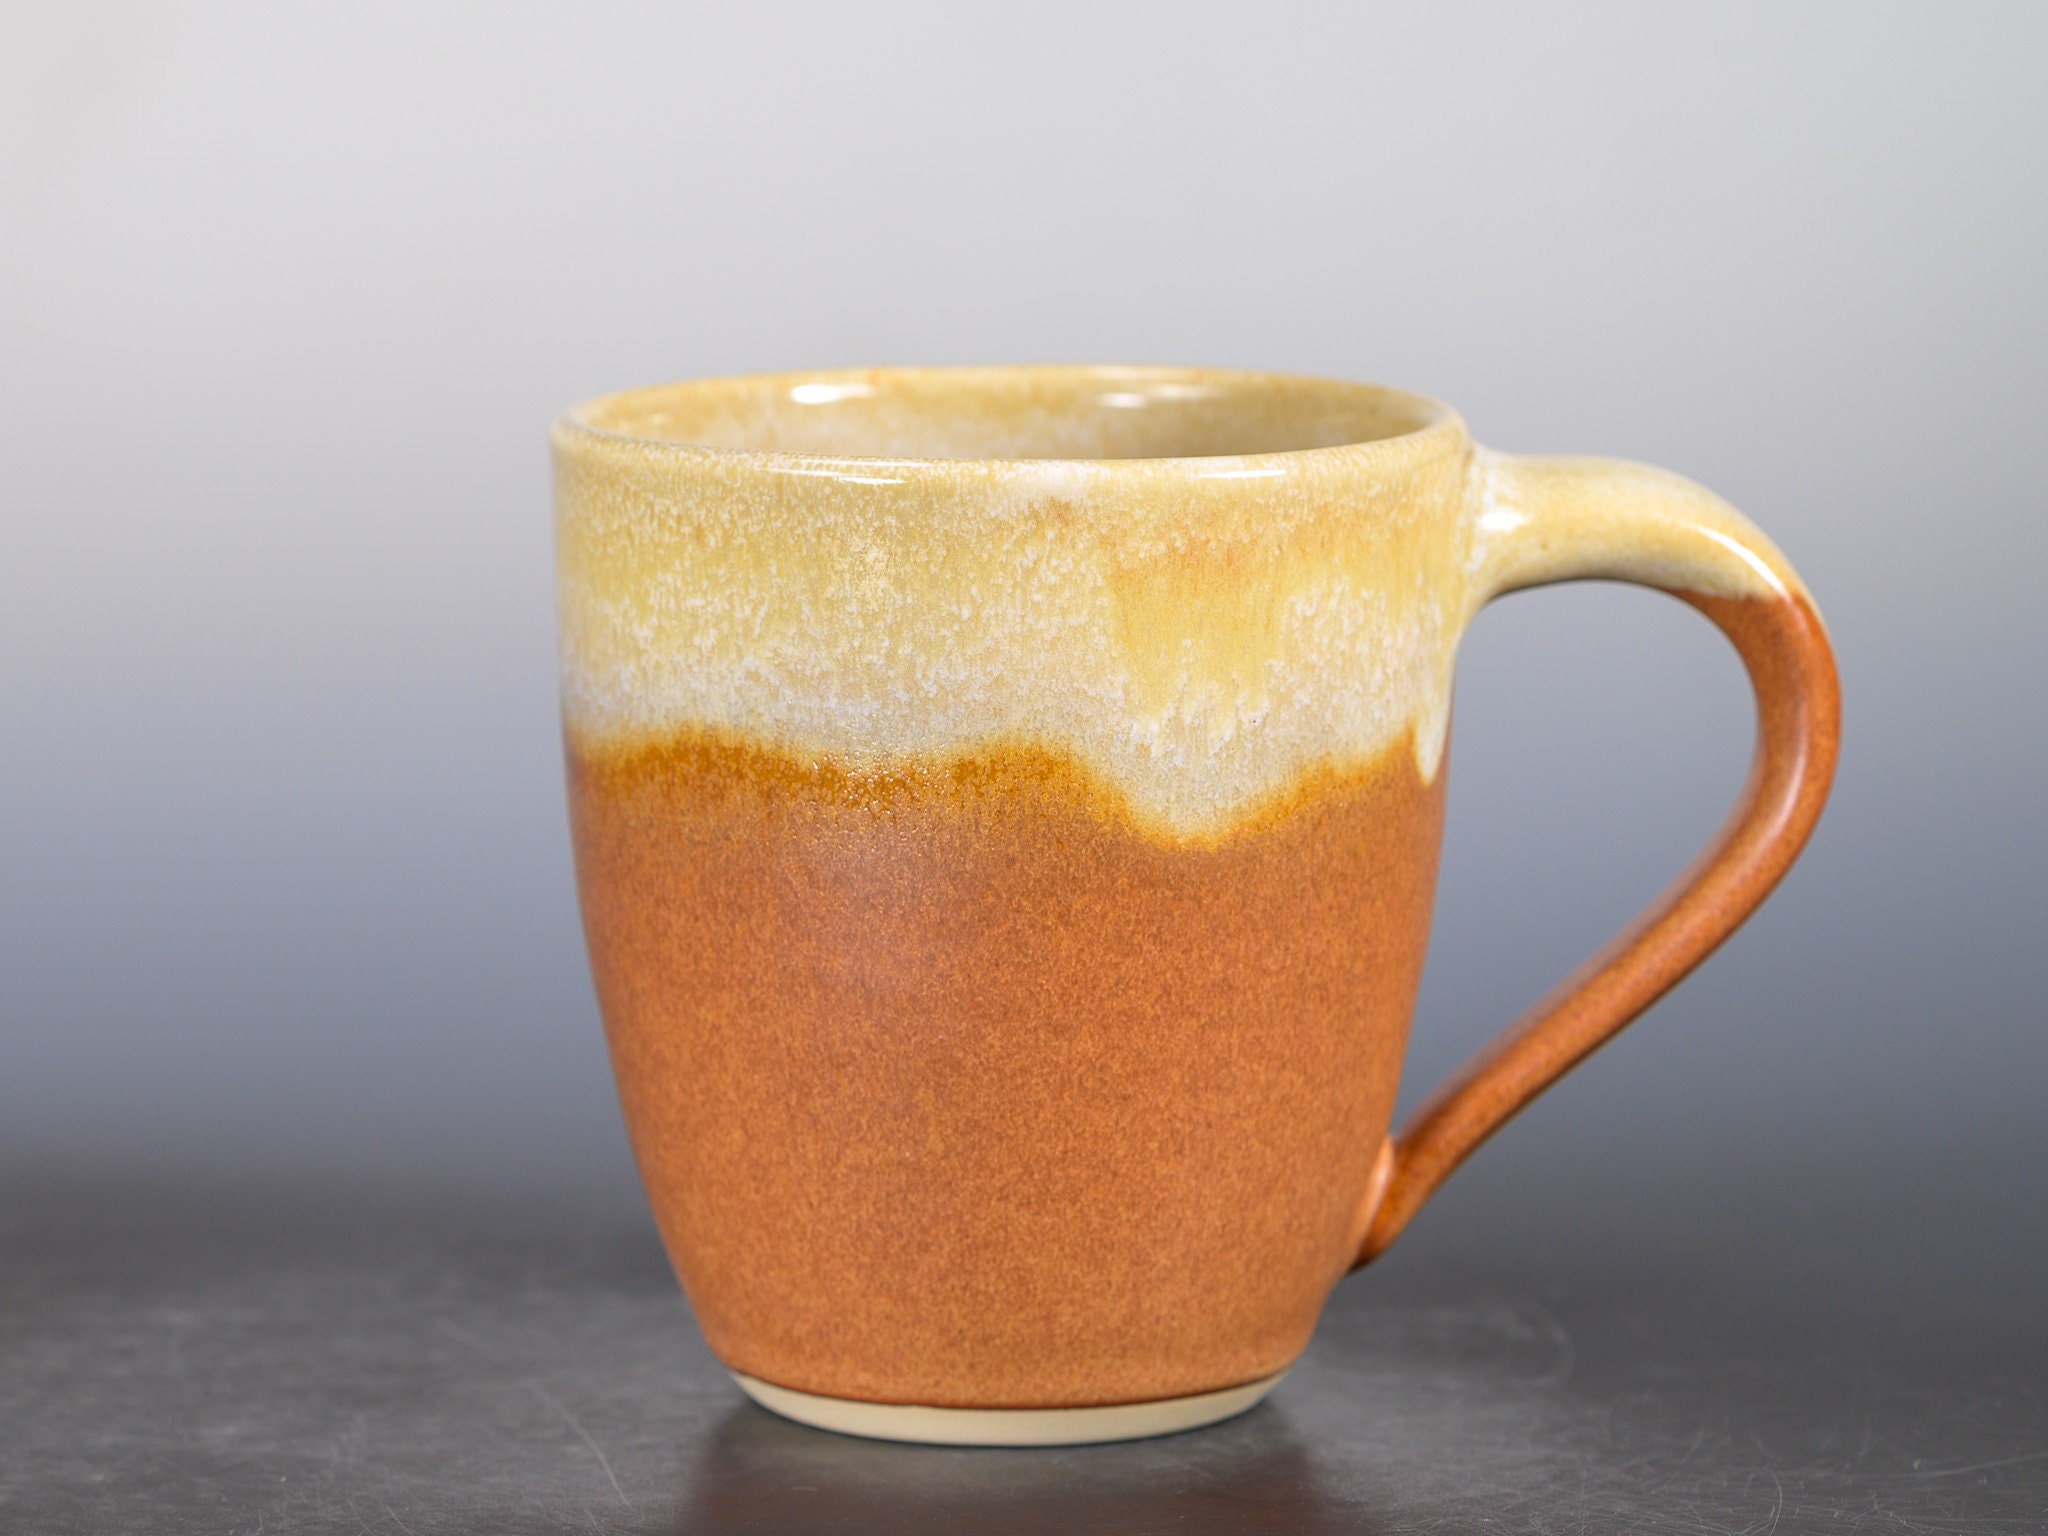 Travel Mug, 18 oz - Handcrafted Baked Goods, Nourishing Simple Meals